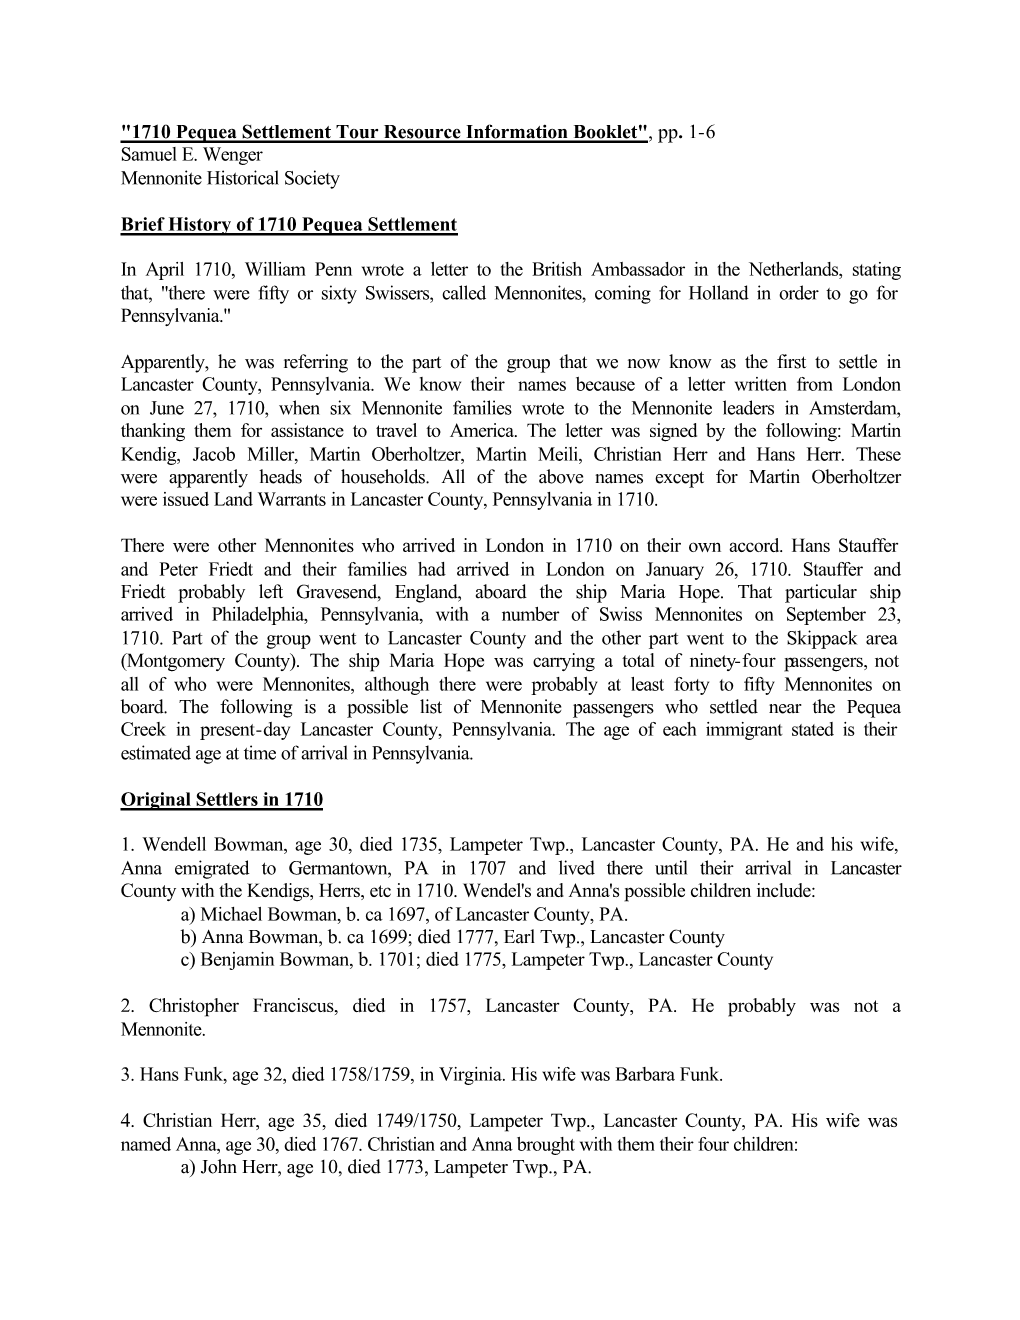 1710 Pequea Settlement Tour Resource Information Booklet", Pp